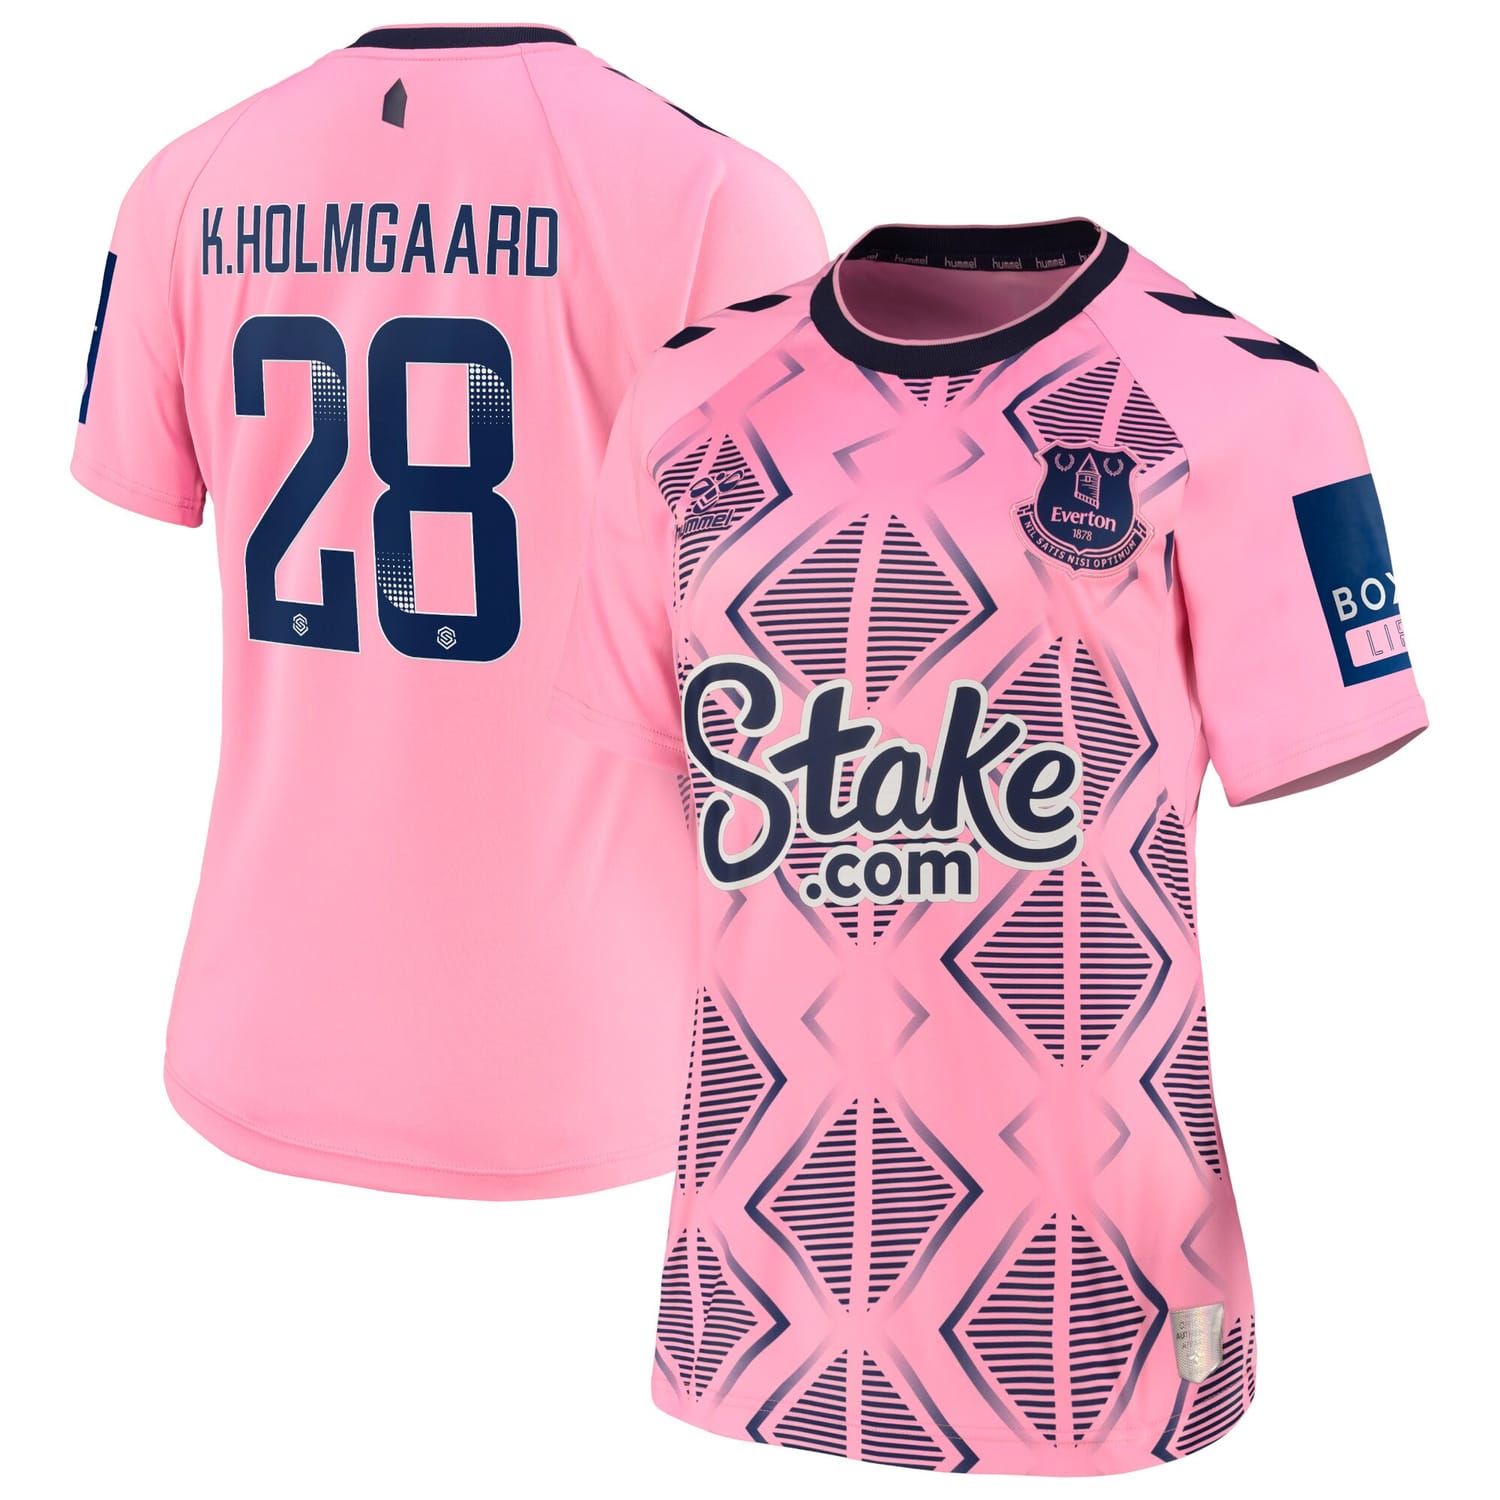 Premier League Everton Away Jersey Shirt 2022-23 player K.Holmgaard 28 printing for Women